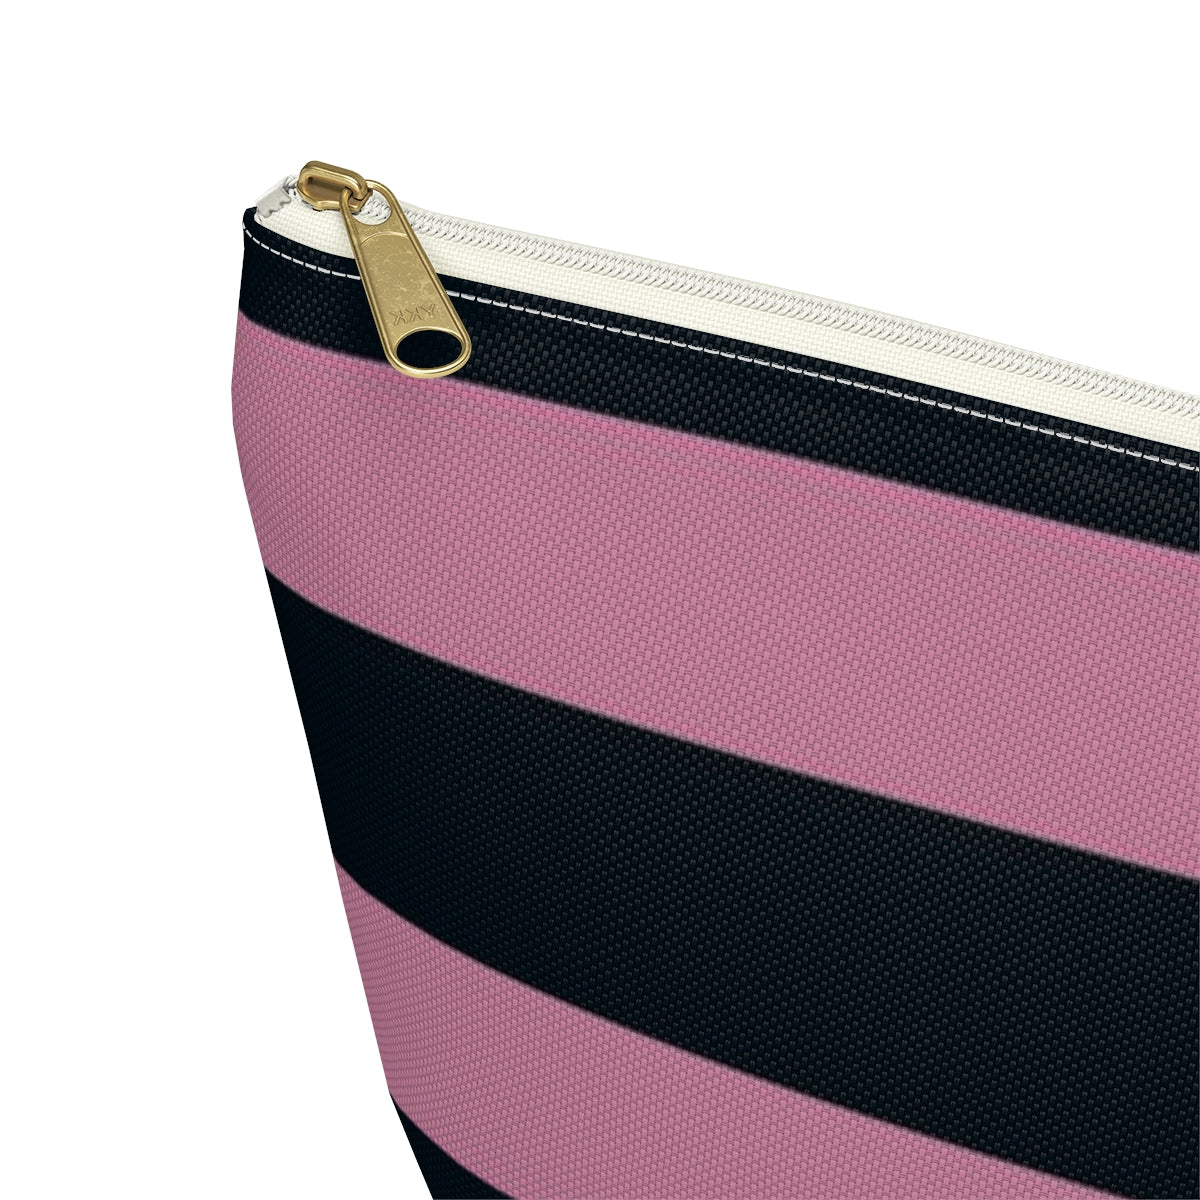 Big Bottom Zipper Pouch - Dusty Rose Pink/Navy Stripes